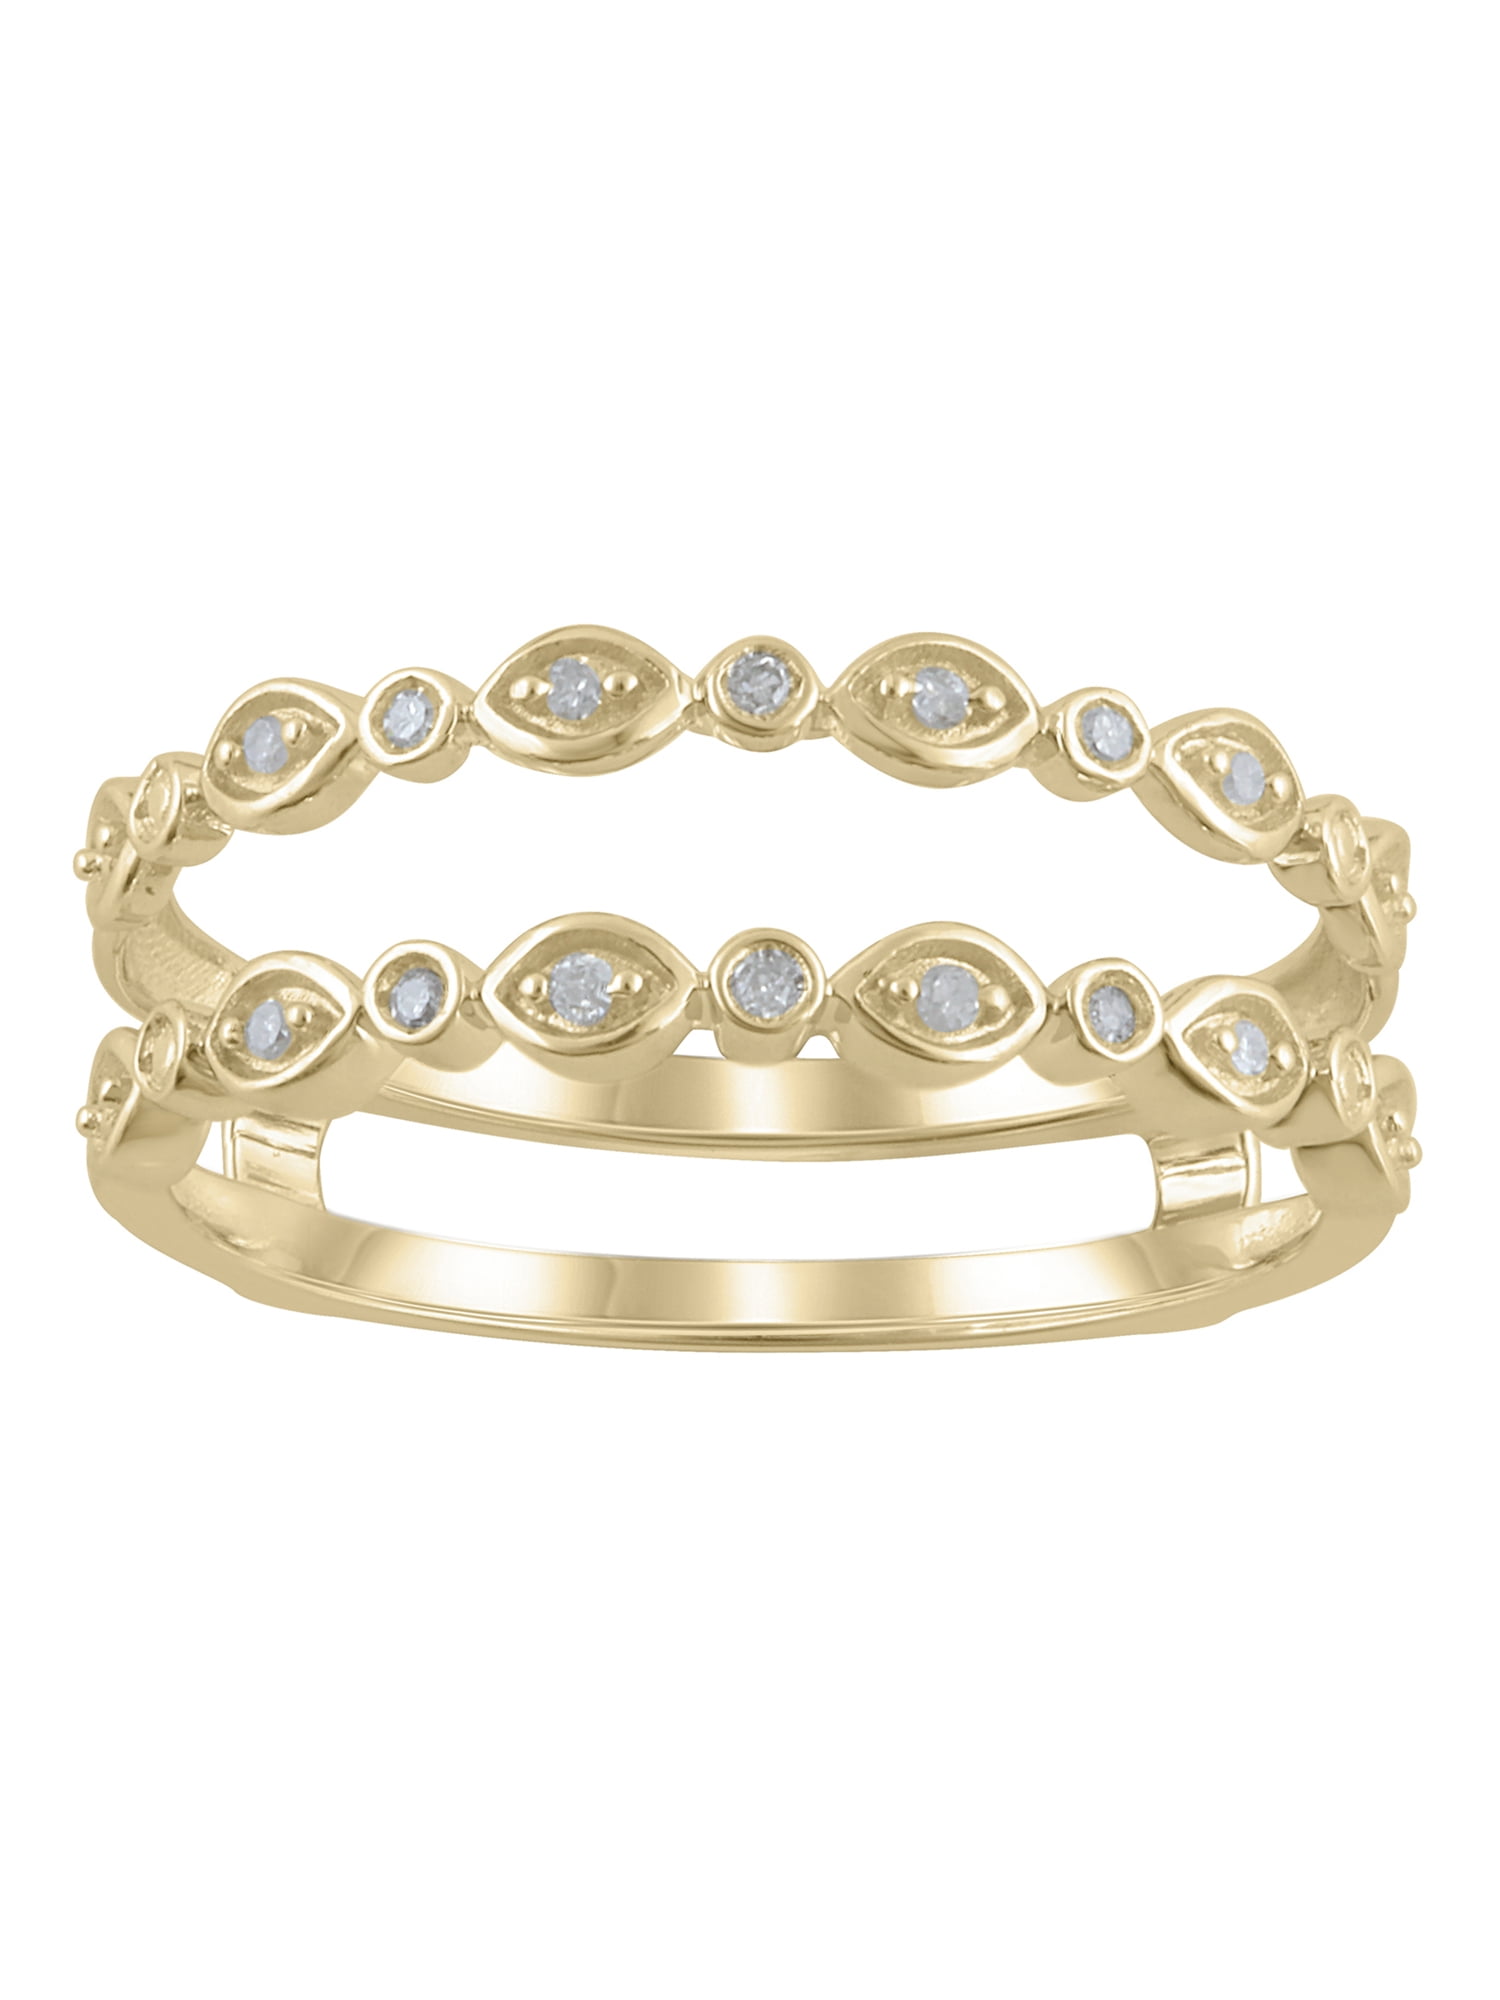 Details about   2.0ct Pear Brilliant Cut Moissanite Unique Engagement Ring 10k Solid White Gold 